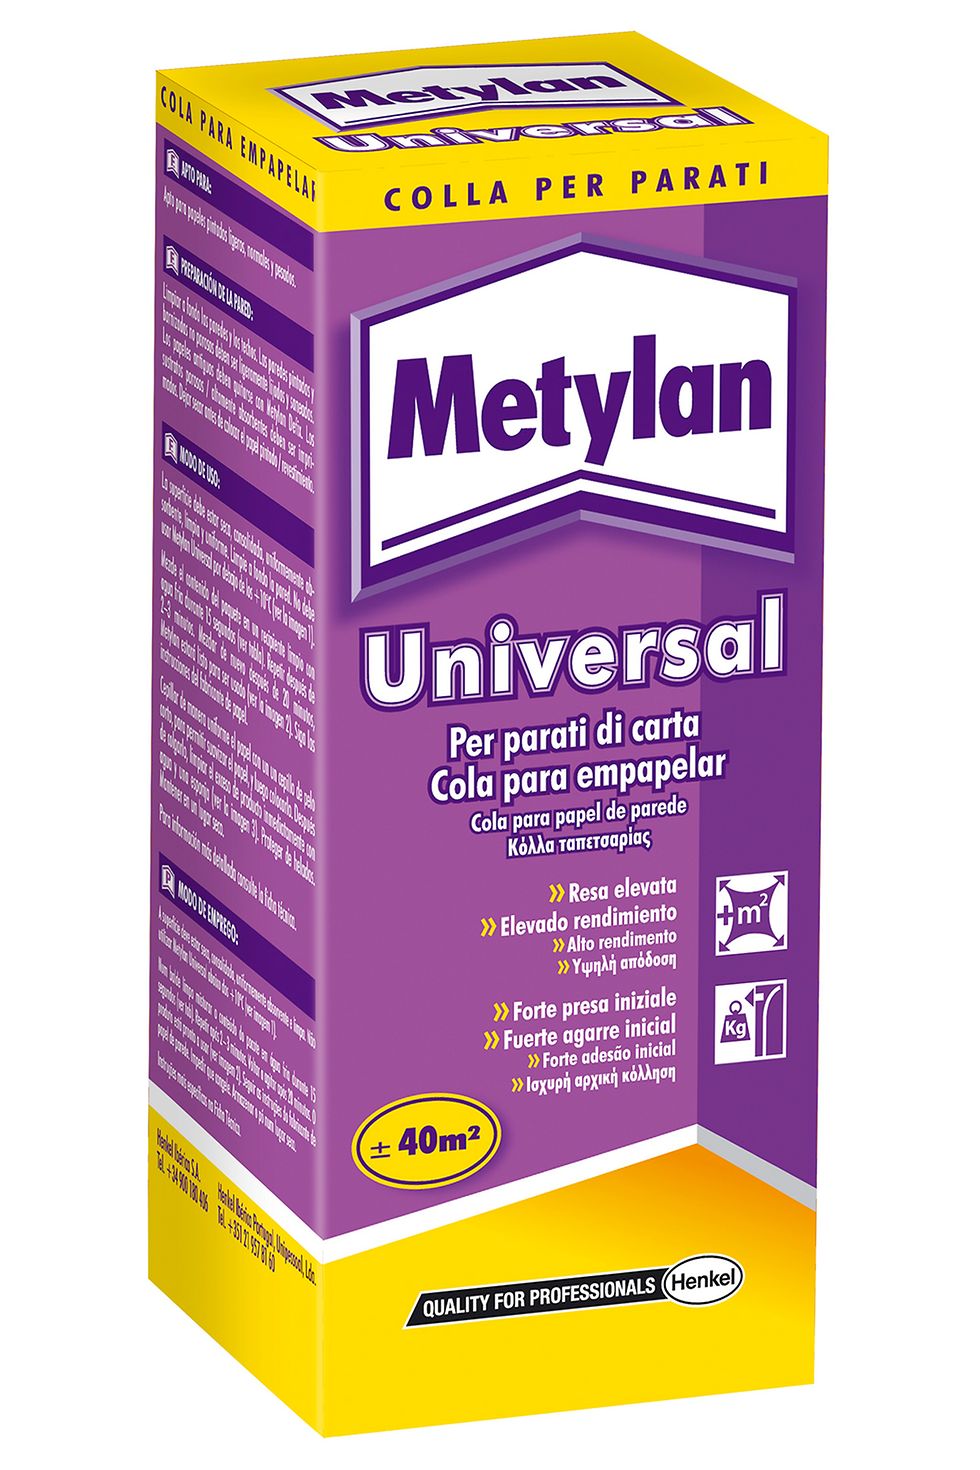 Metylan – Universal